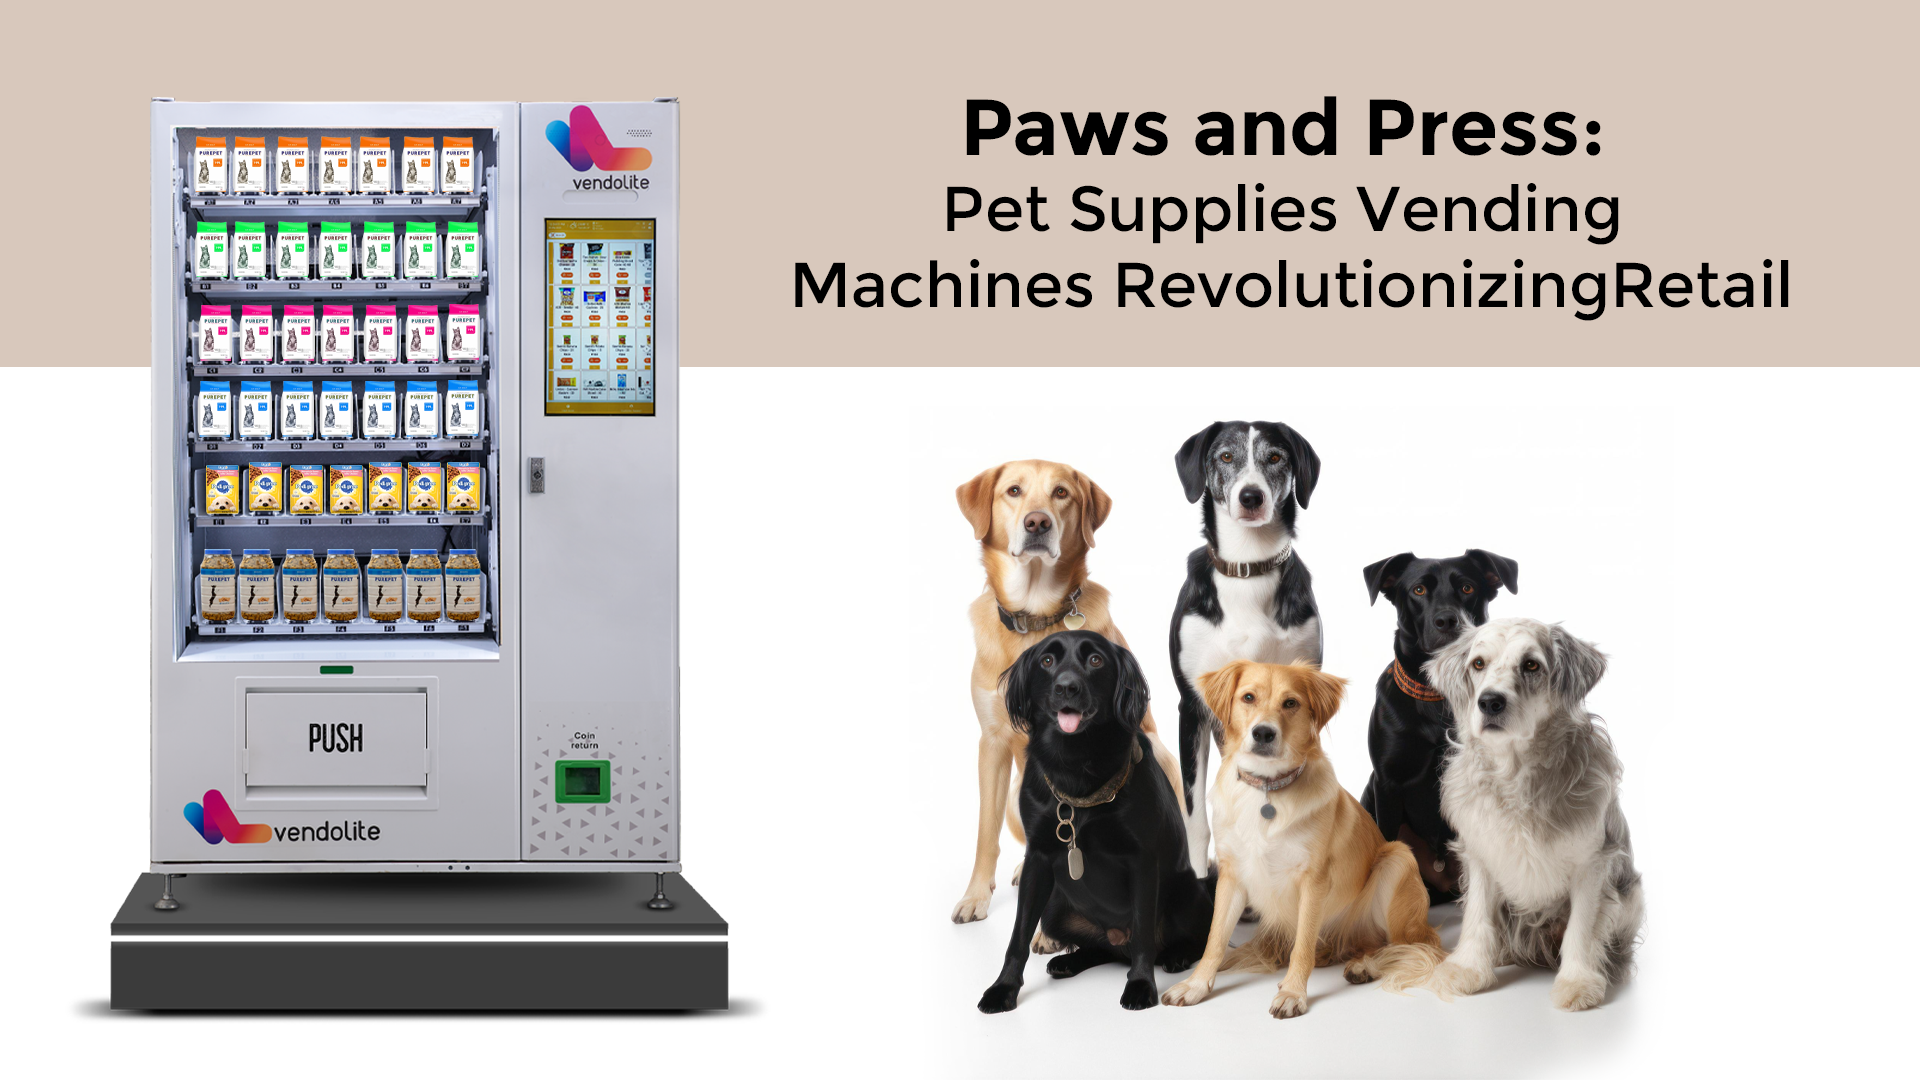 Paws and Press: Pet Supplies Vending Machines Revolutionizing Retail